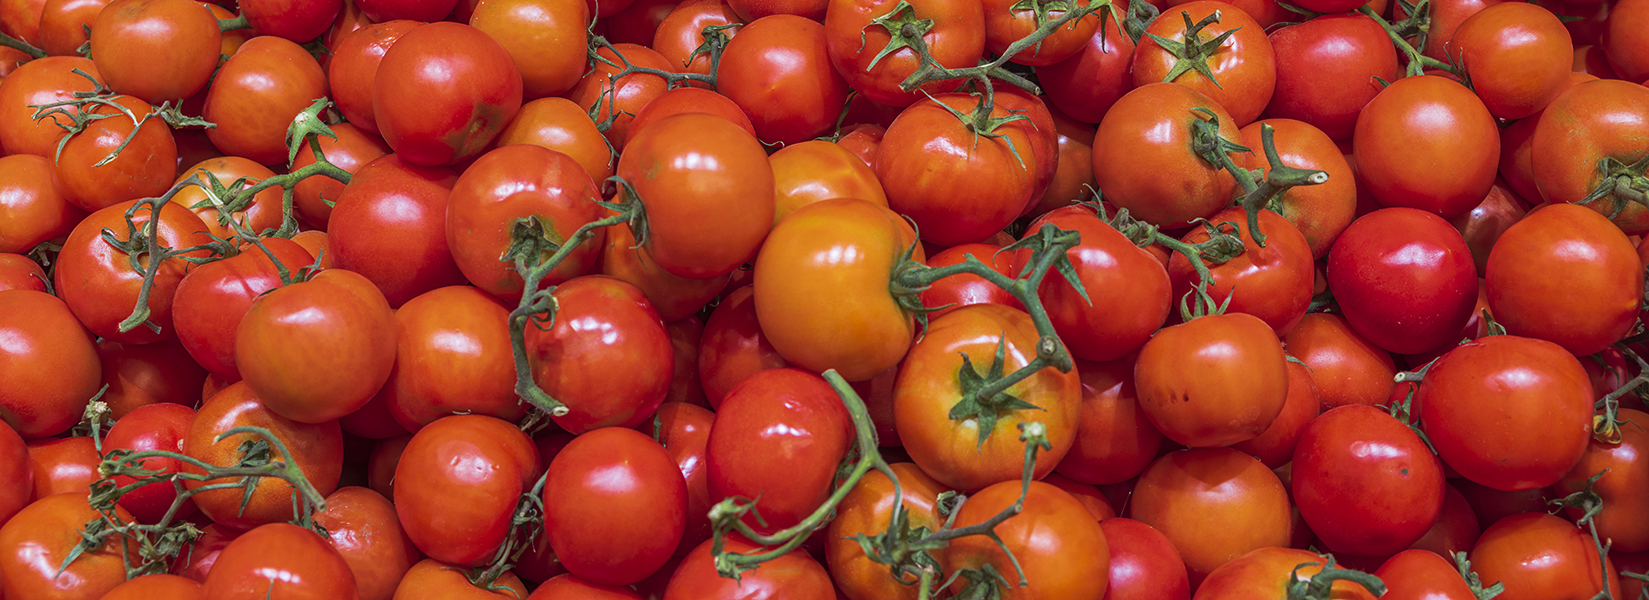 Många röda tomater